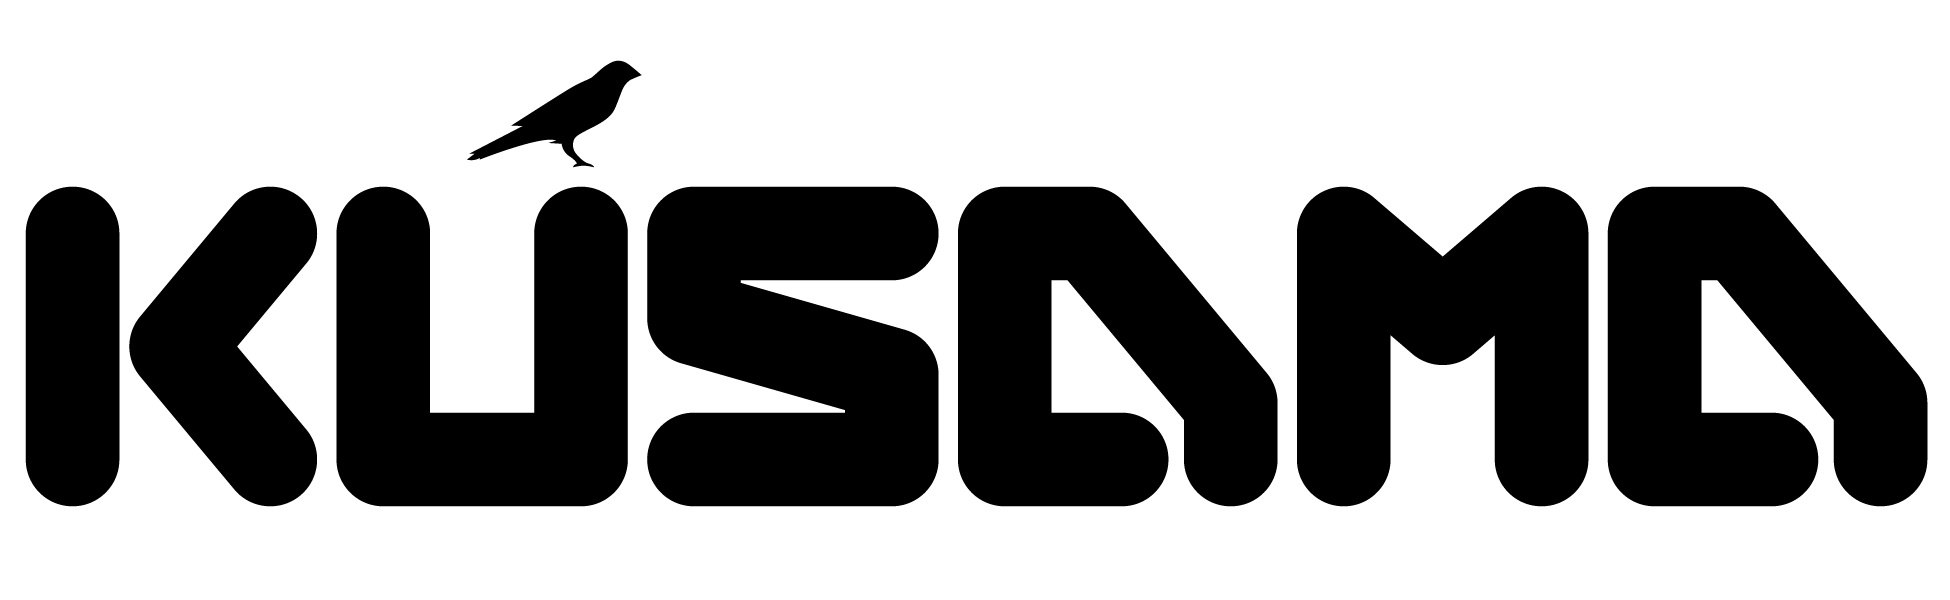 Kusama Crypto Logo PNG Pic